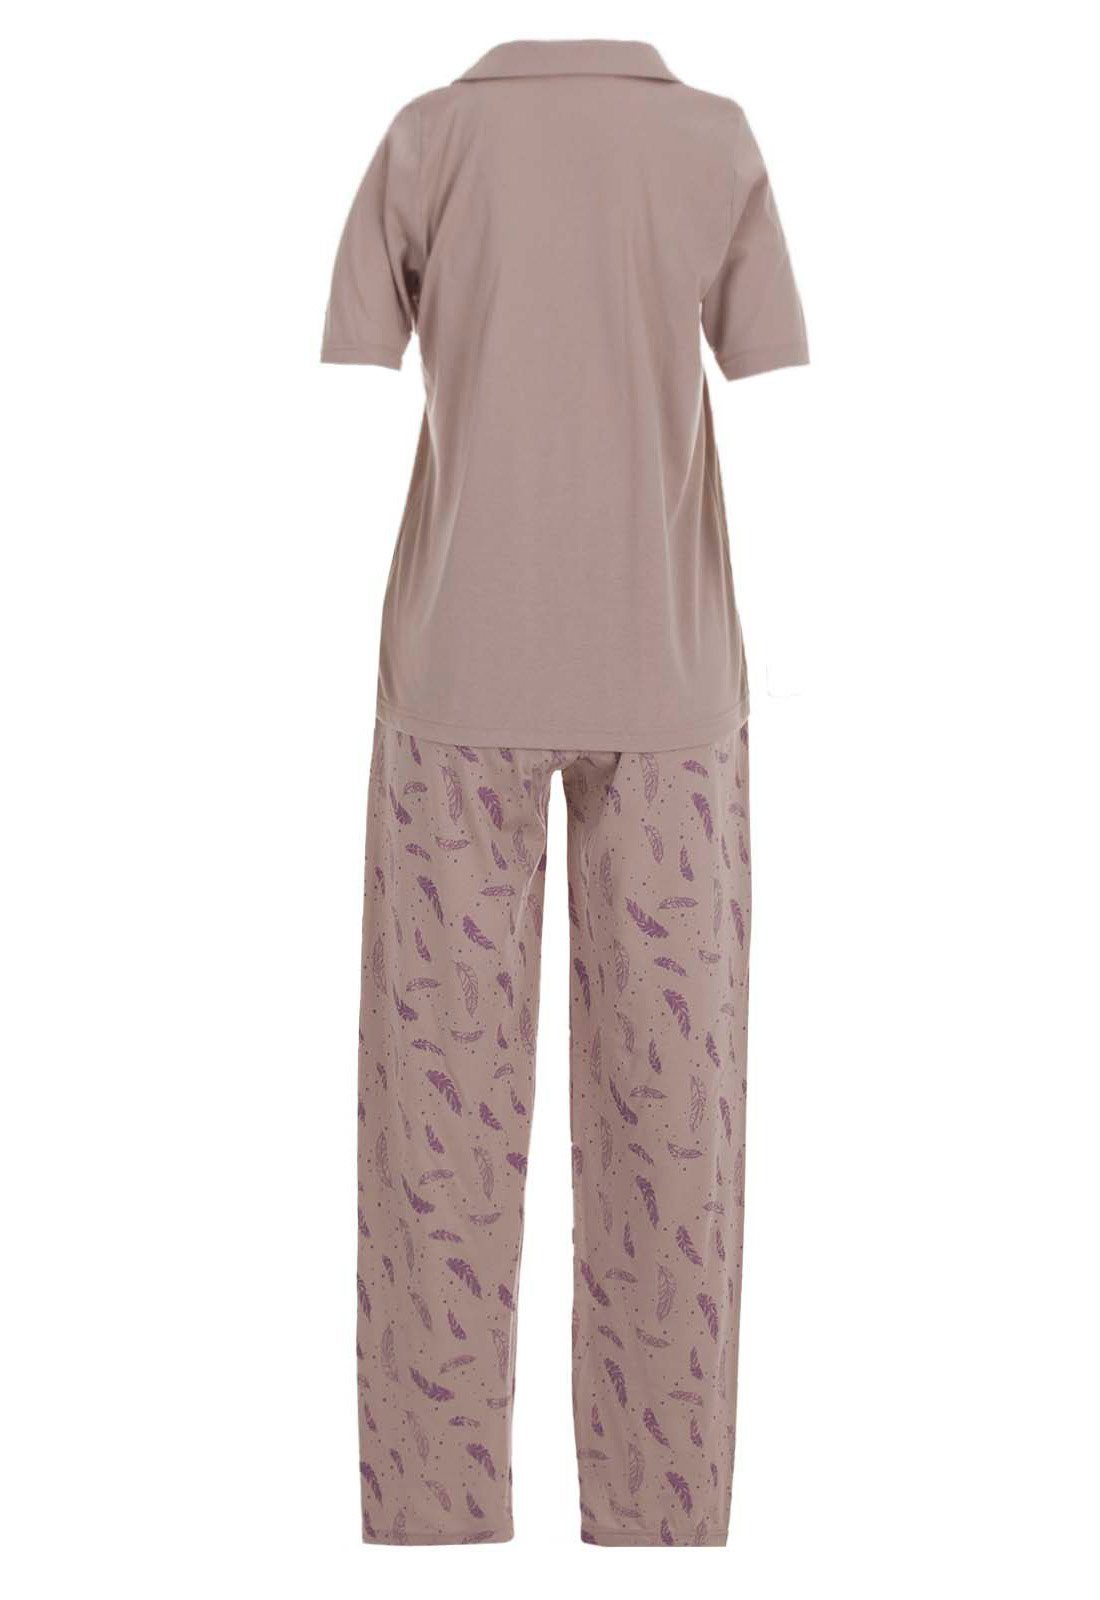 zeitlos Schlafanzug Pyjama Set Kurzarm sand - Feder